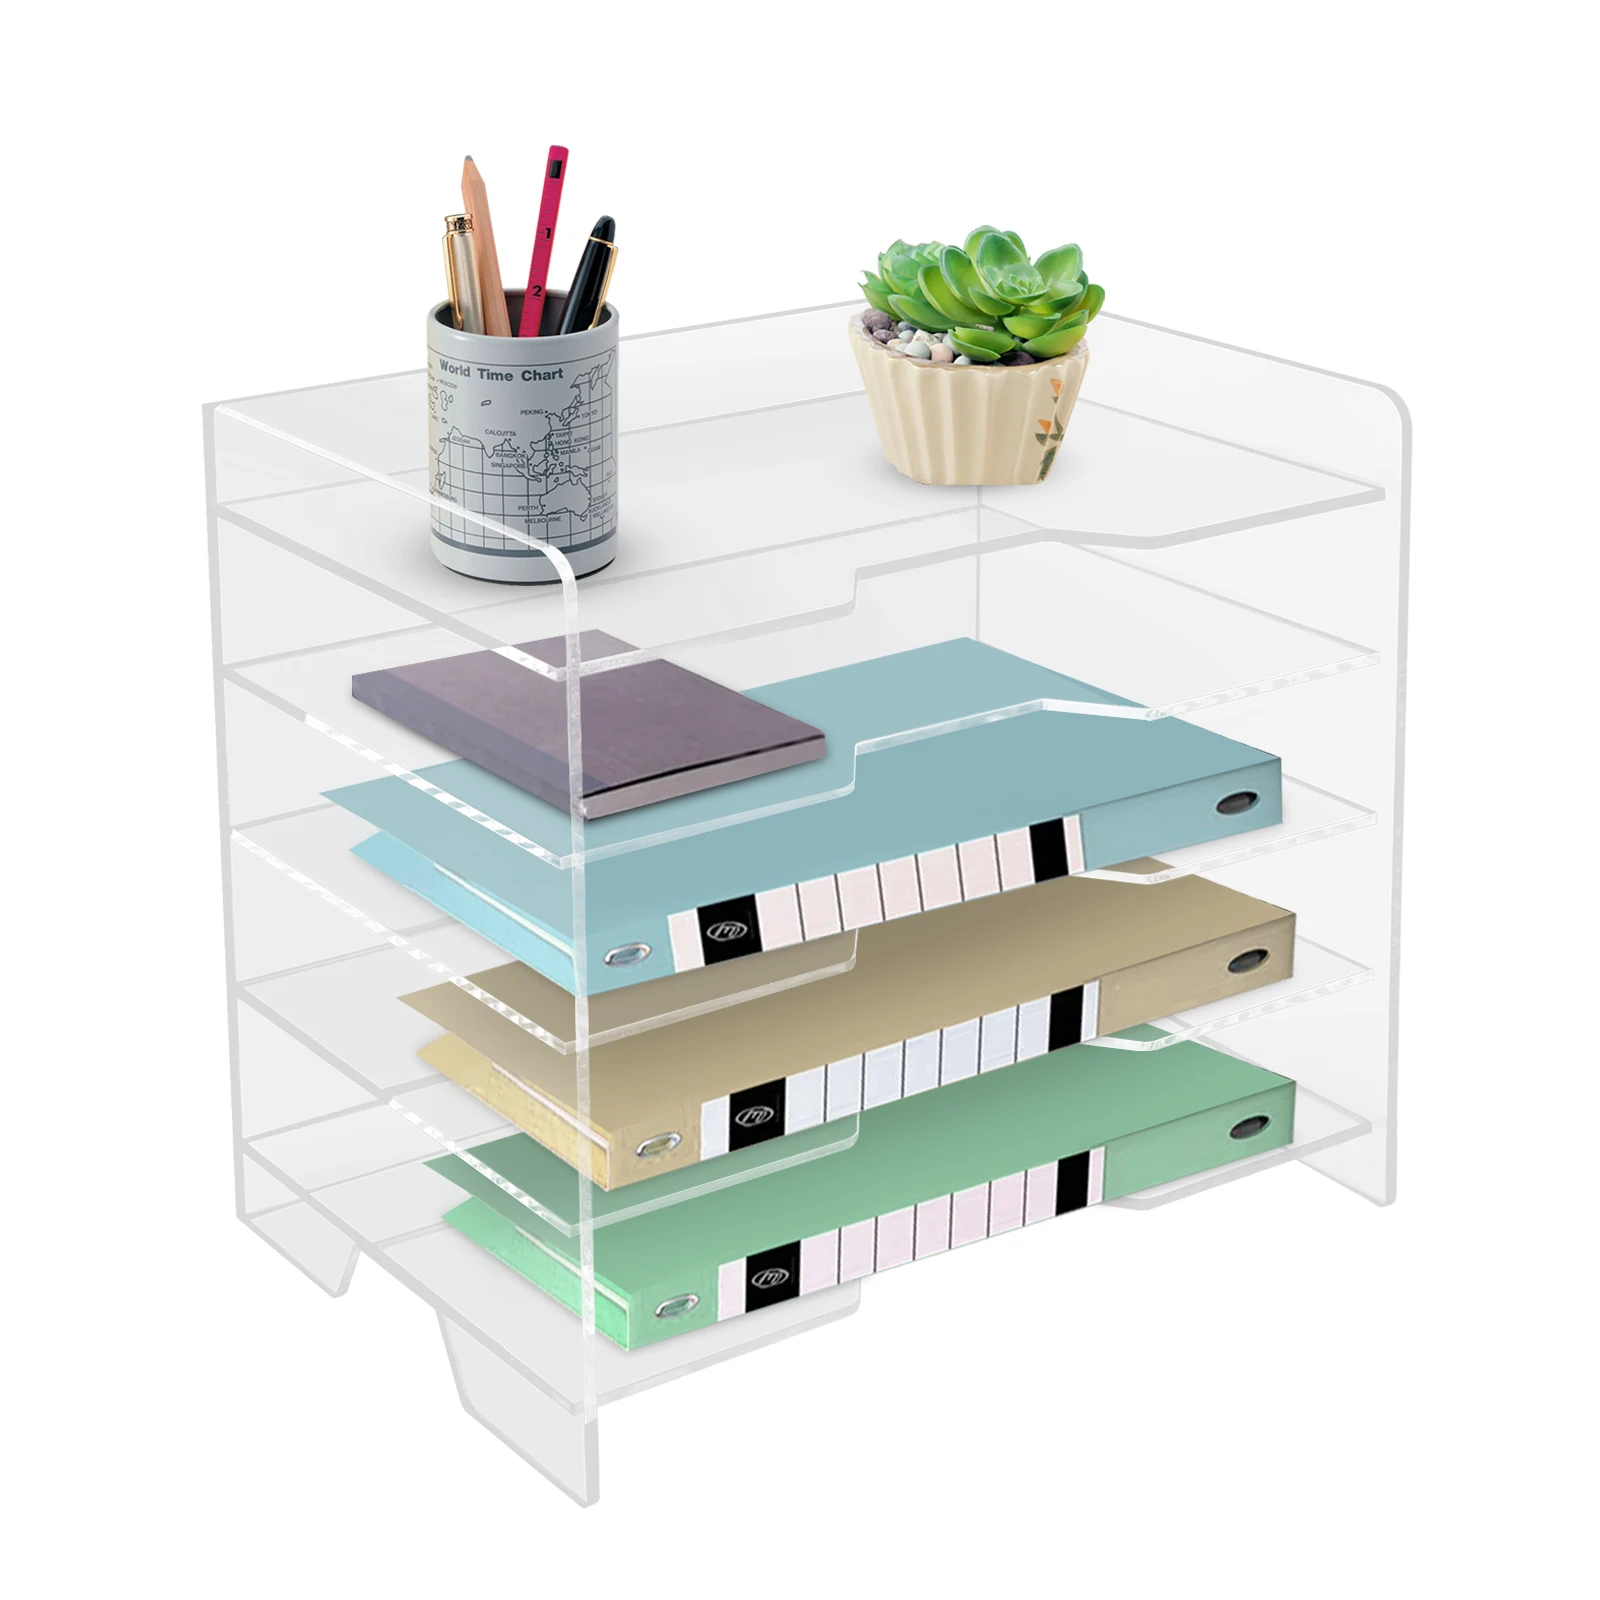 Acrylic Desk Organizer Clear Paper Tray File Storage for Office Organization